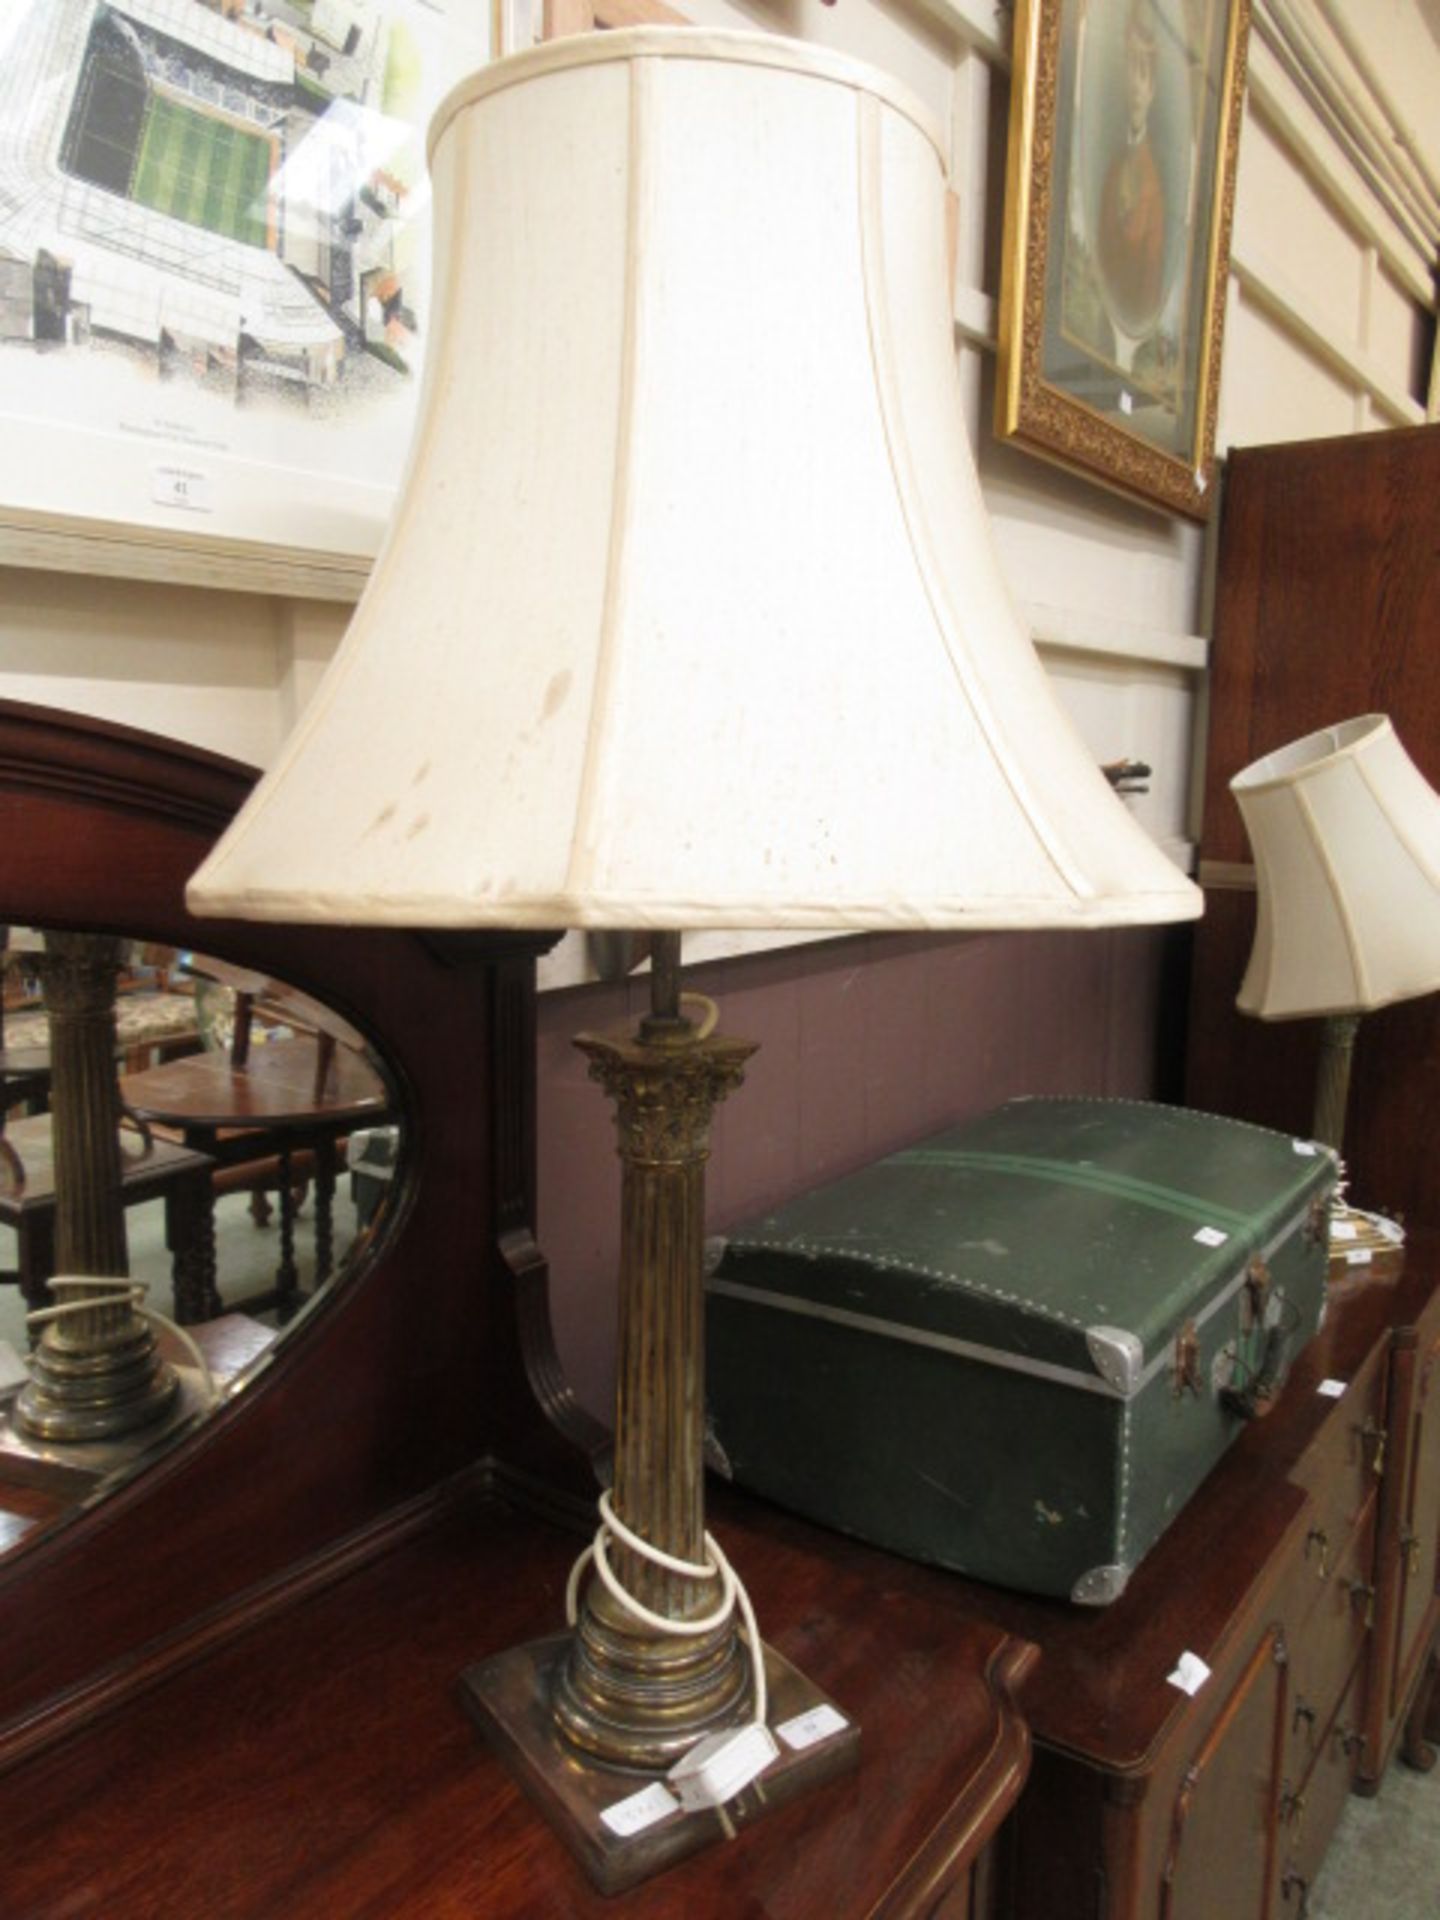 A brass effect table lamp with Corinthian column